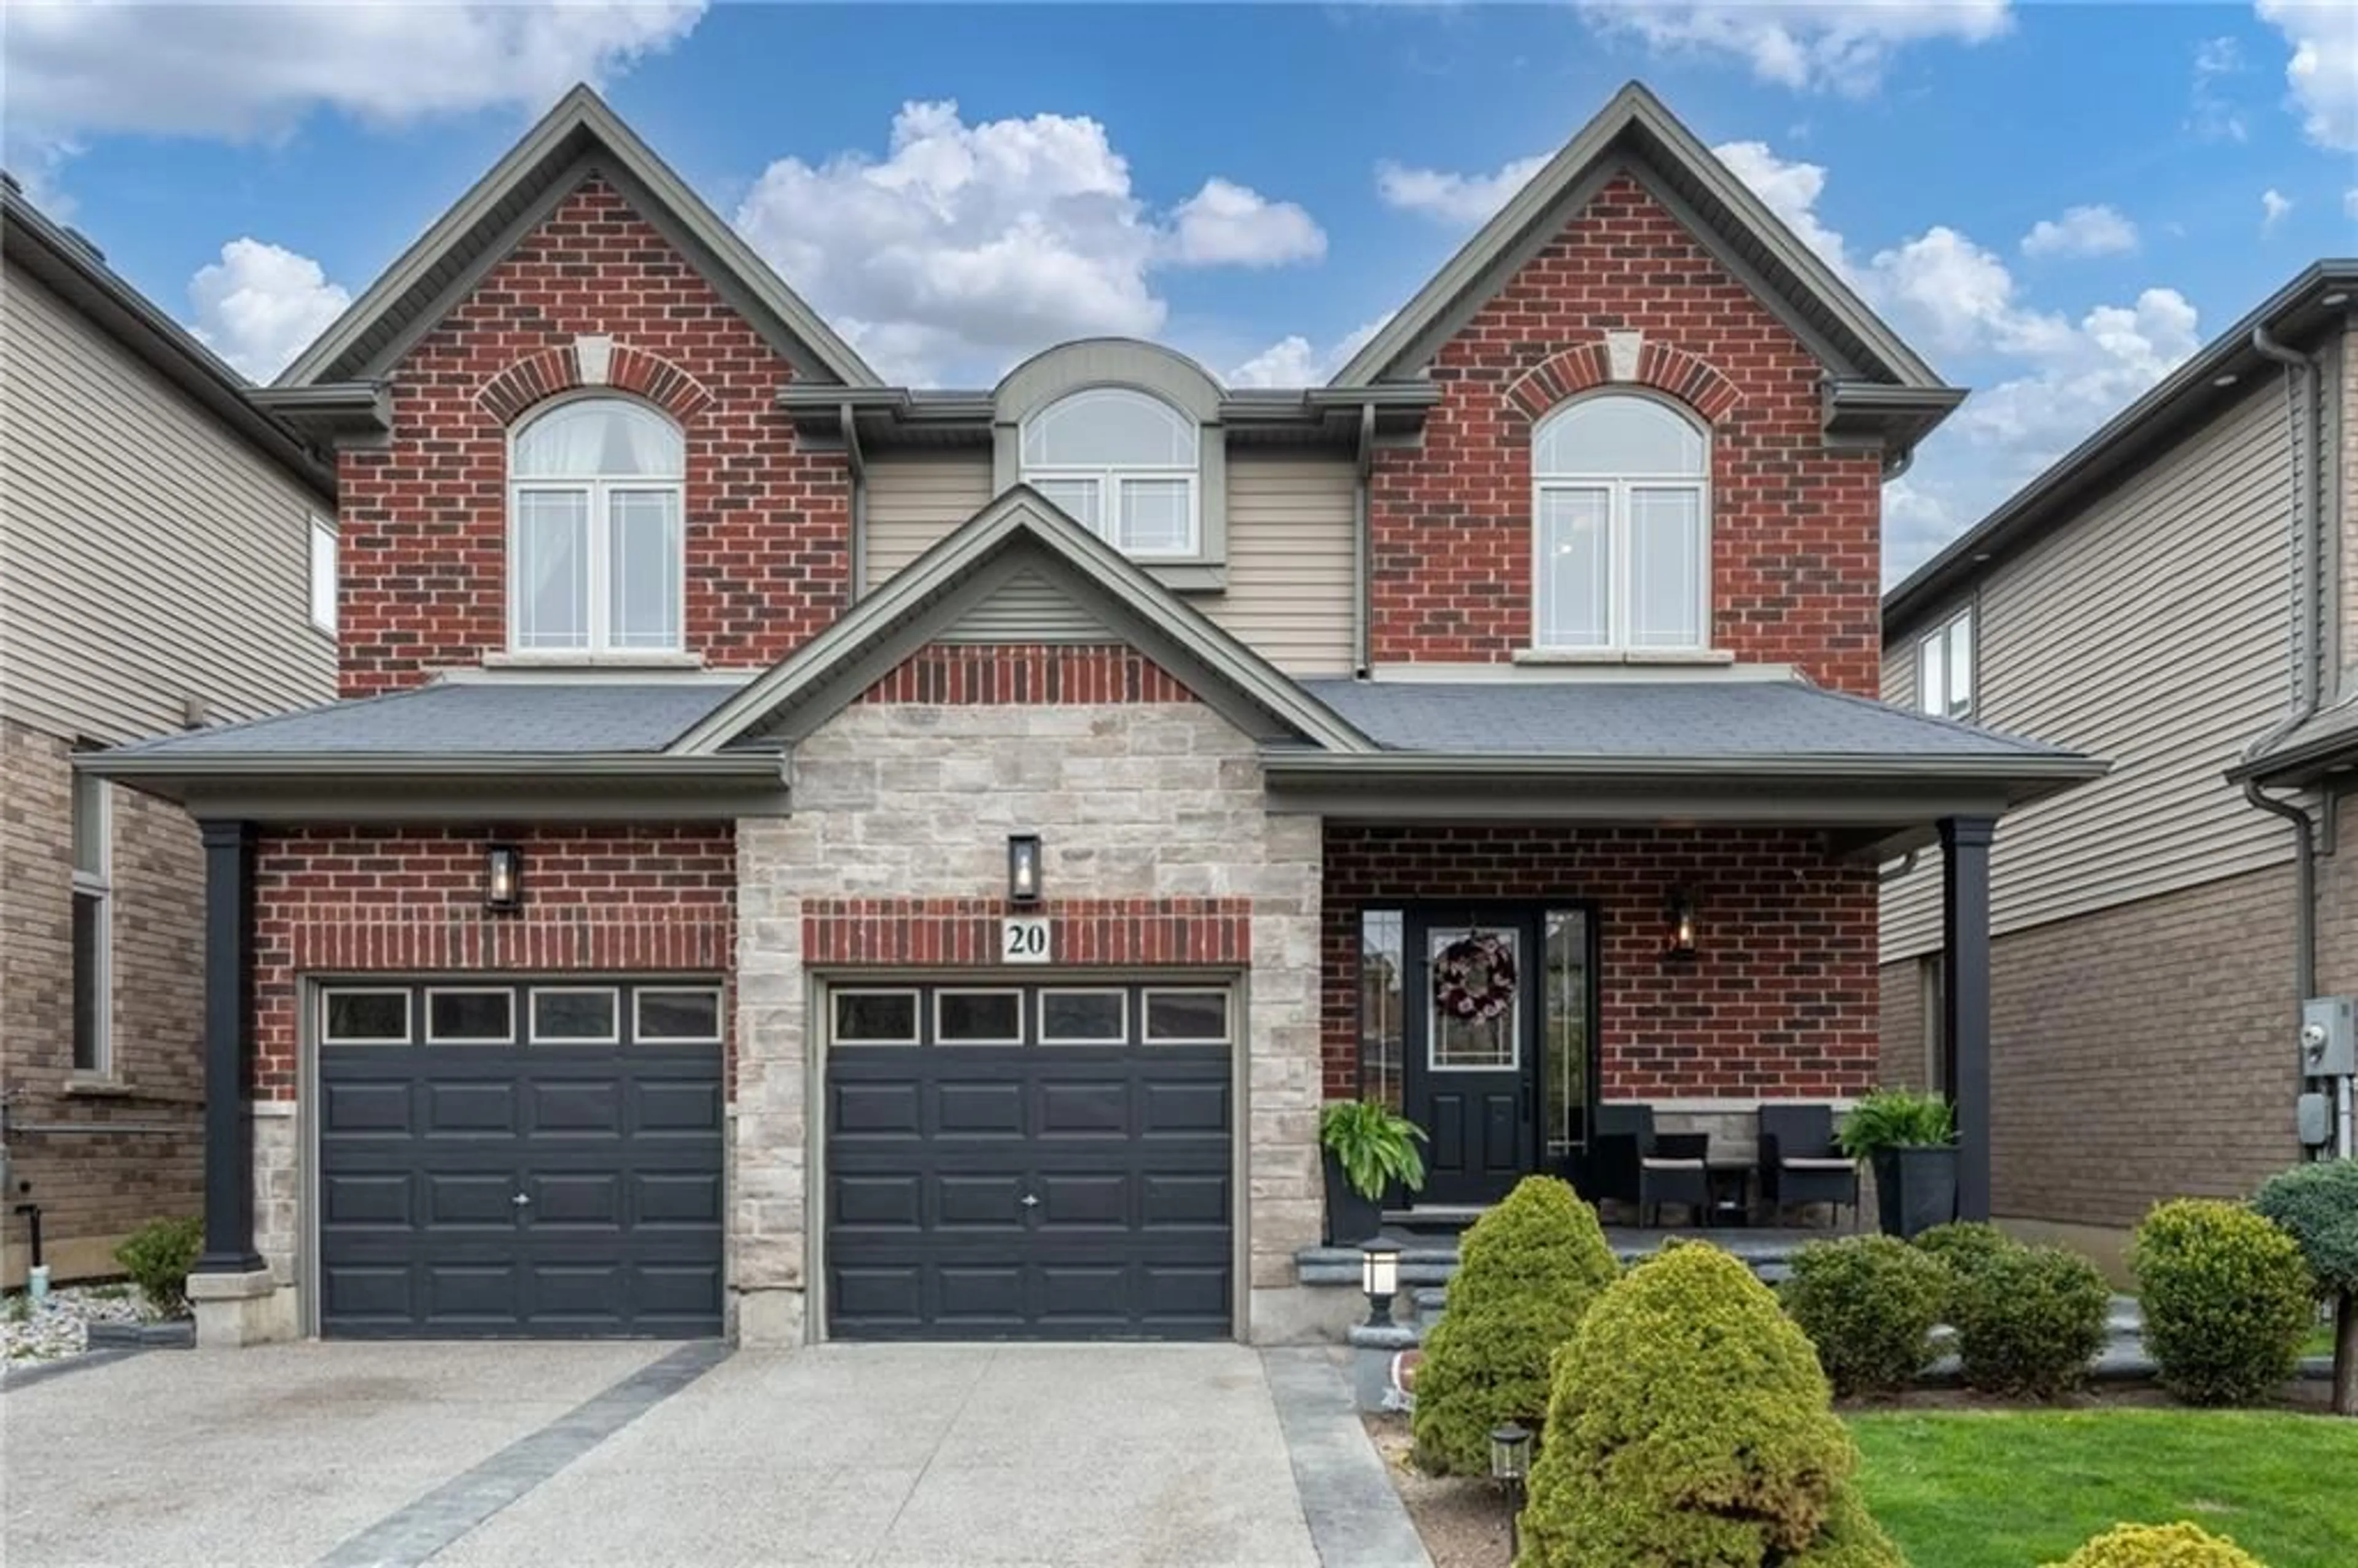 Home with brick exterior material for 20 Kinsman Dr, Binbrook Ontario L0R 1C0